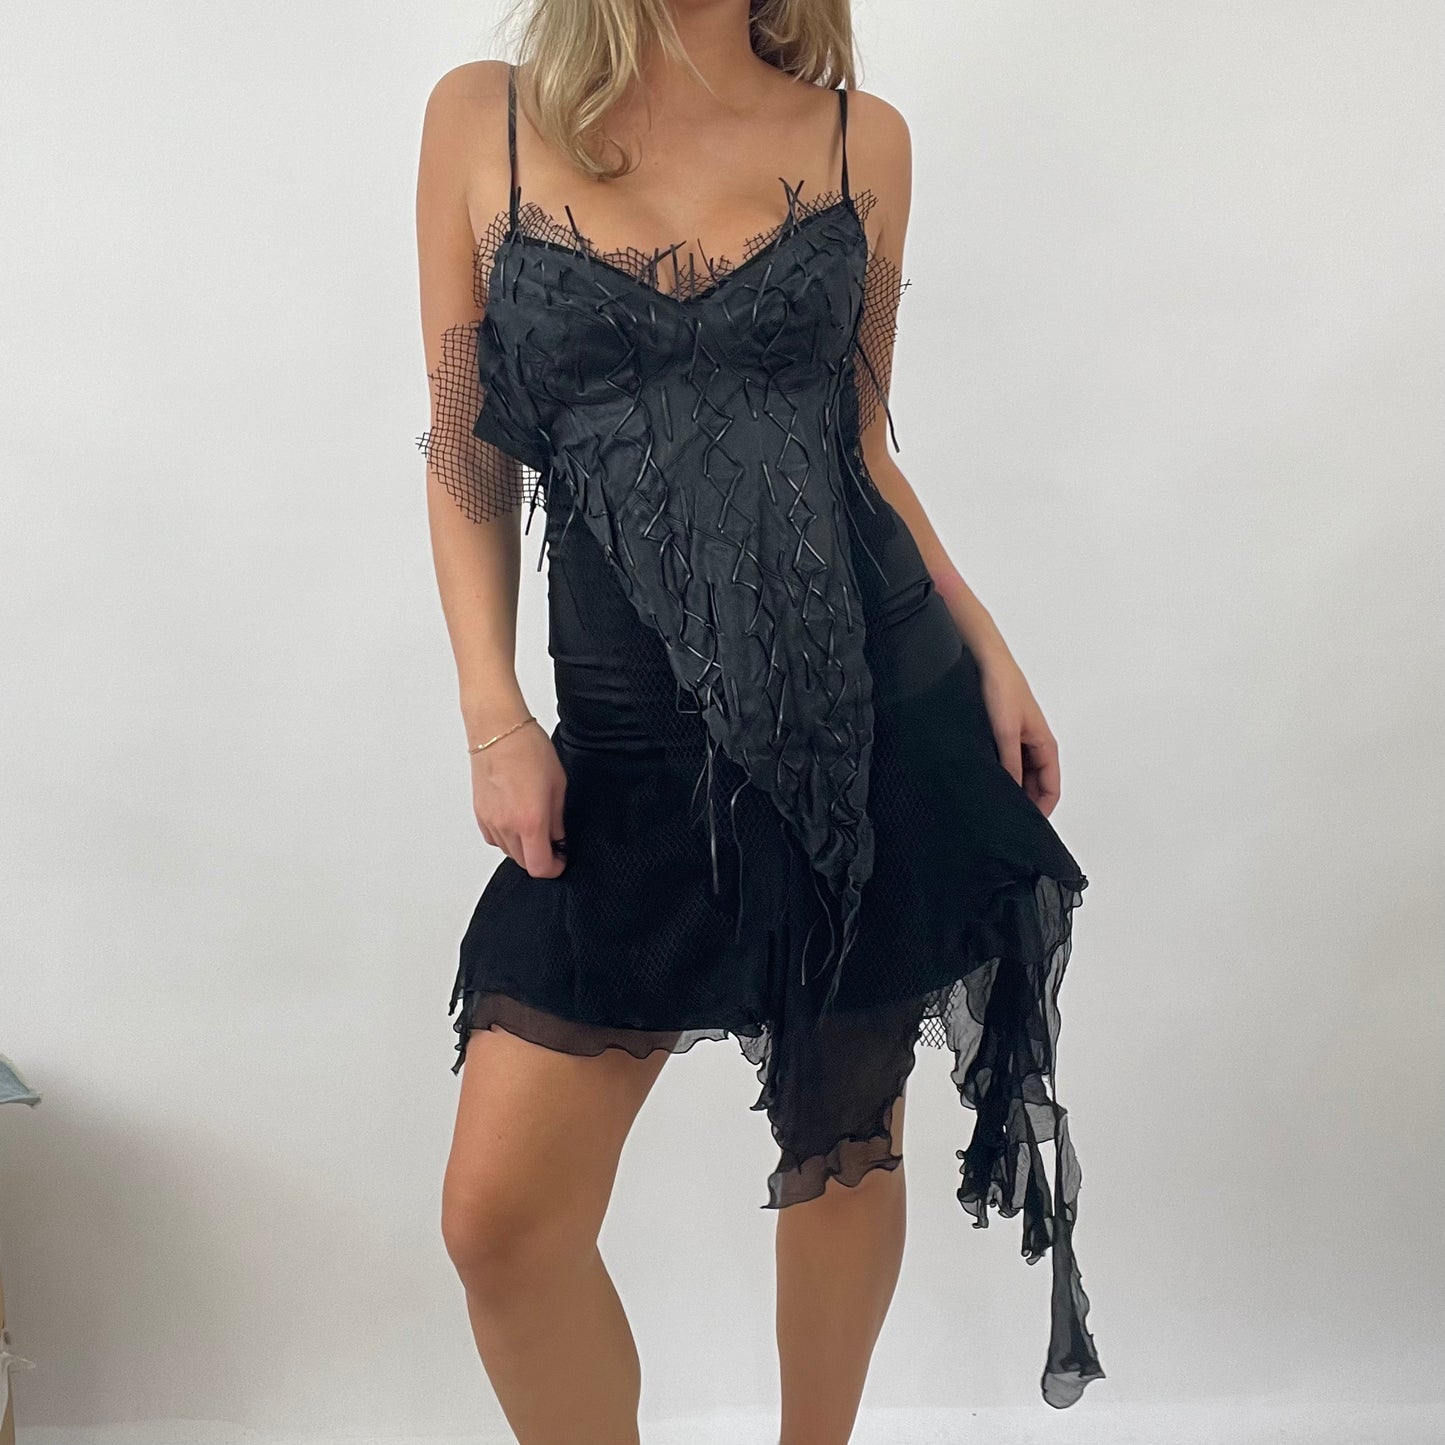 VINTAGE GEMS DROP | small black corset style asymmetric dress